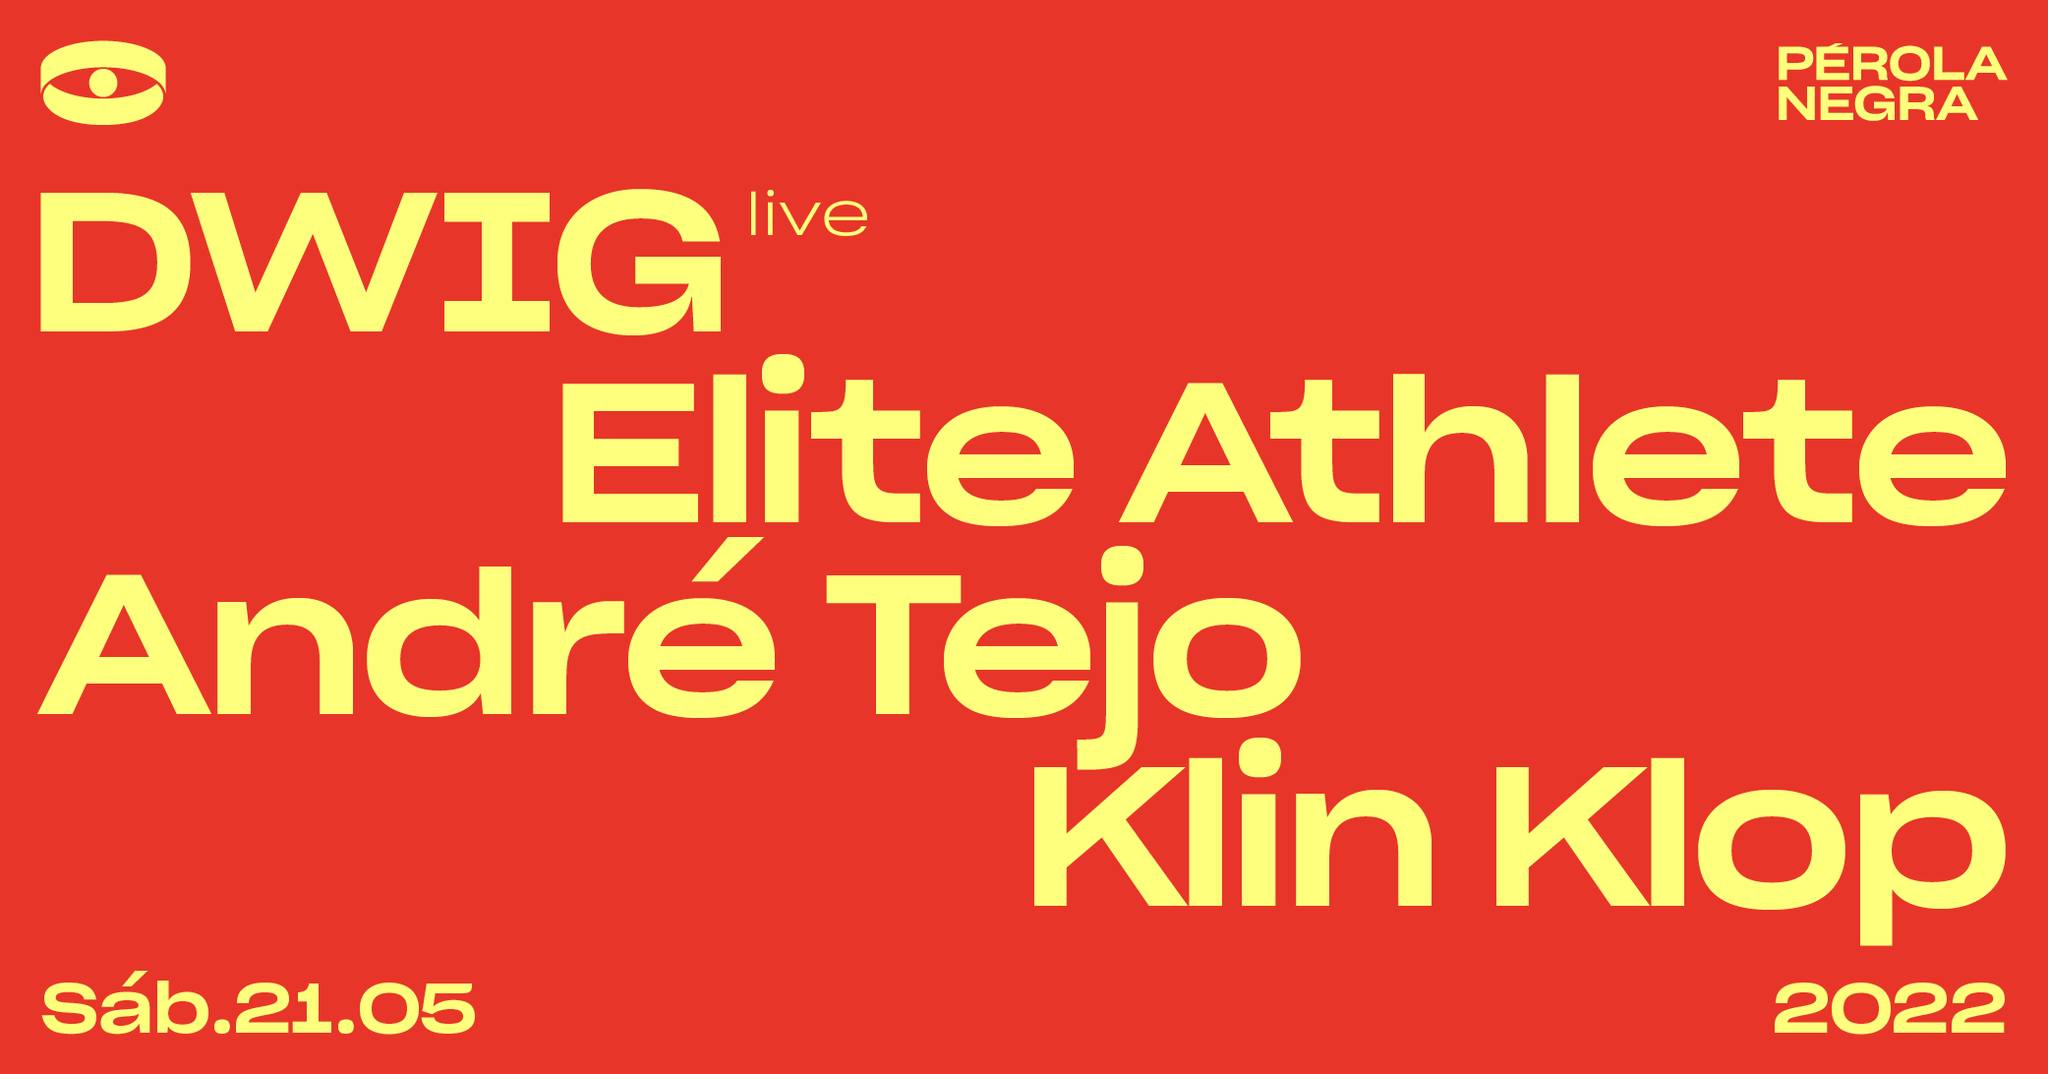 DWIG (live), Elite Athlete b2b André Tejo, Klin Klop